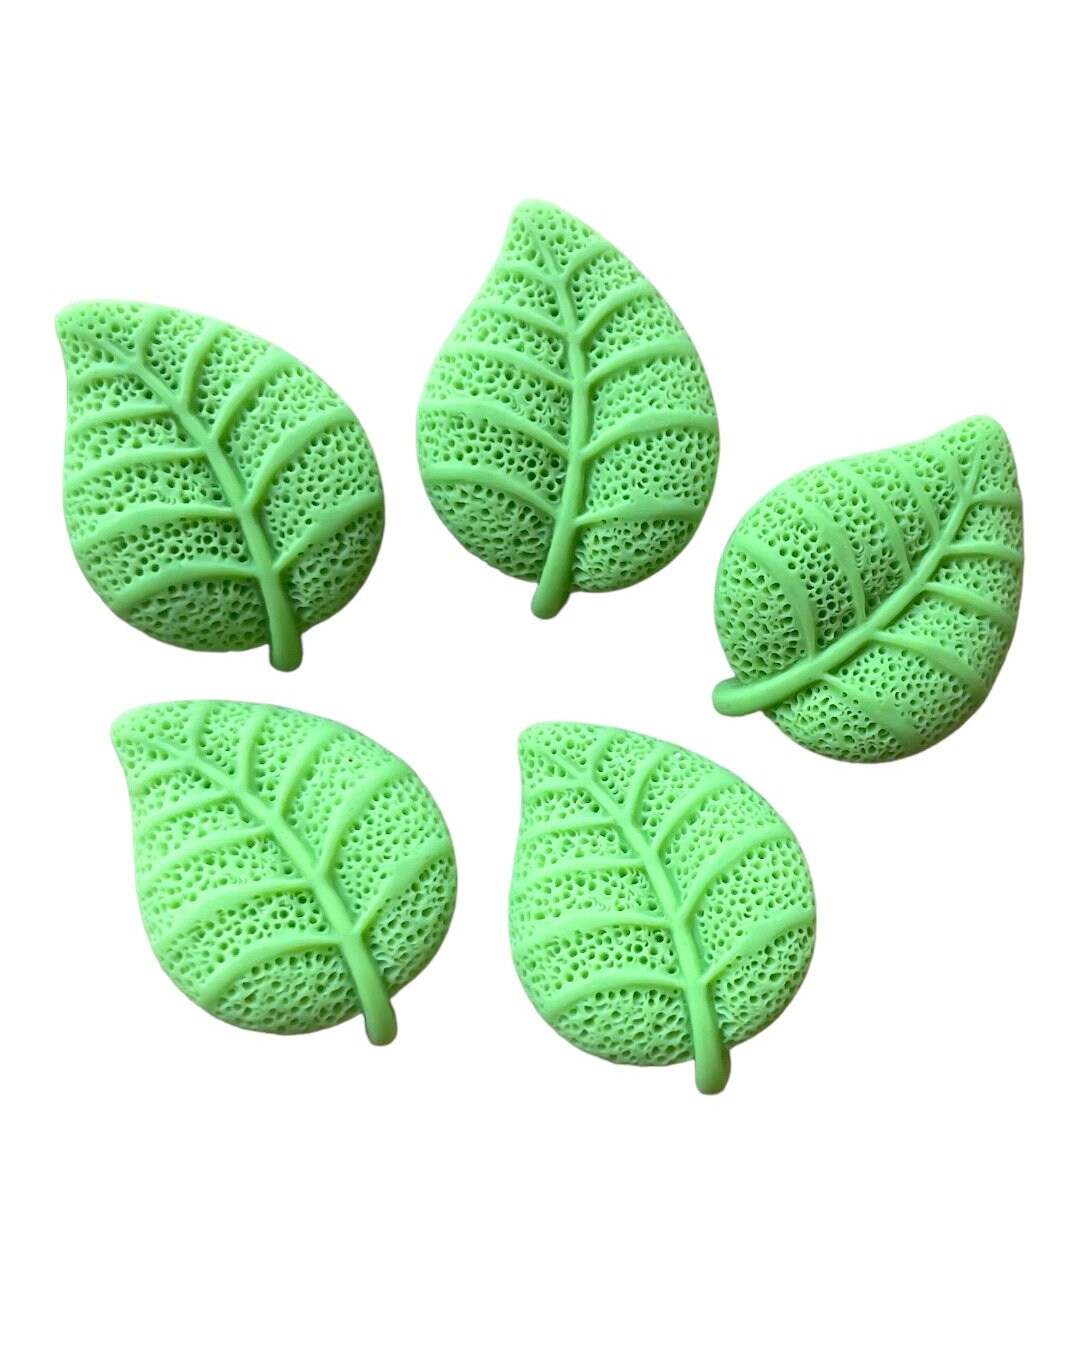 Green resin leaf cabochons, 22mm